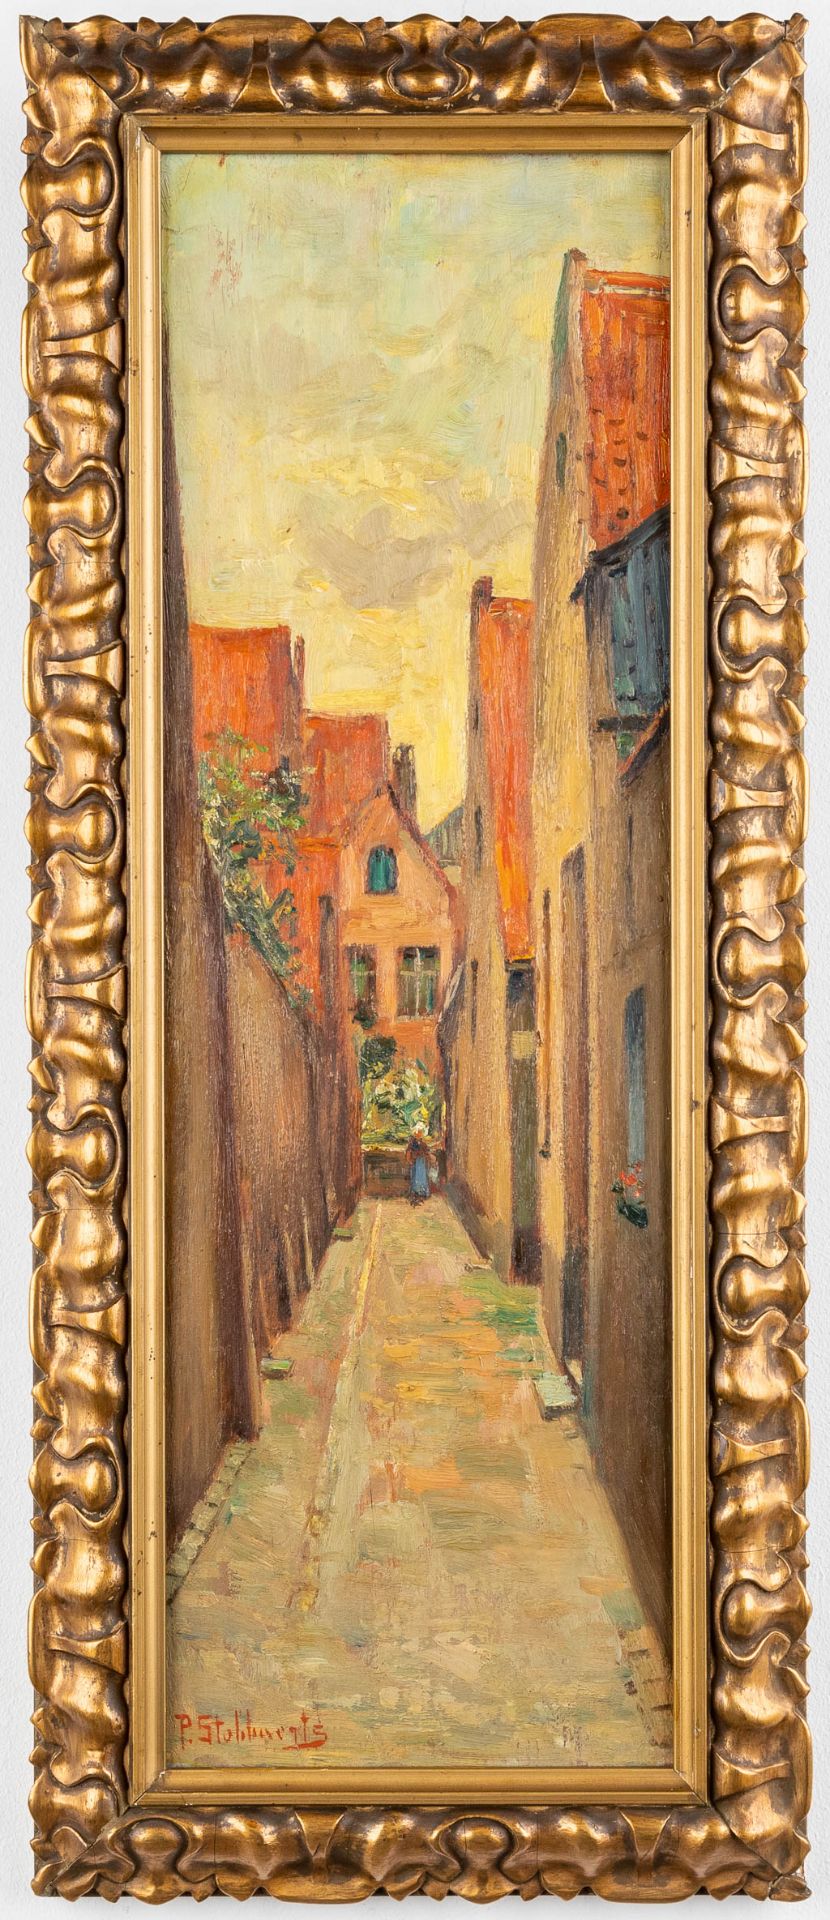 Pieter STOBBAERTS (1865-1948) 'Vette Vispoort, Brugge' oil on board. (W:18 x H:56 cm) - Image 3 of 6